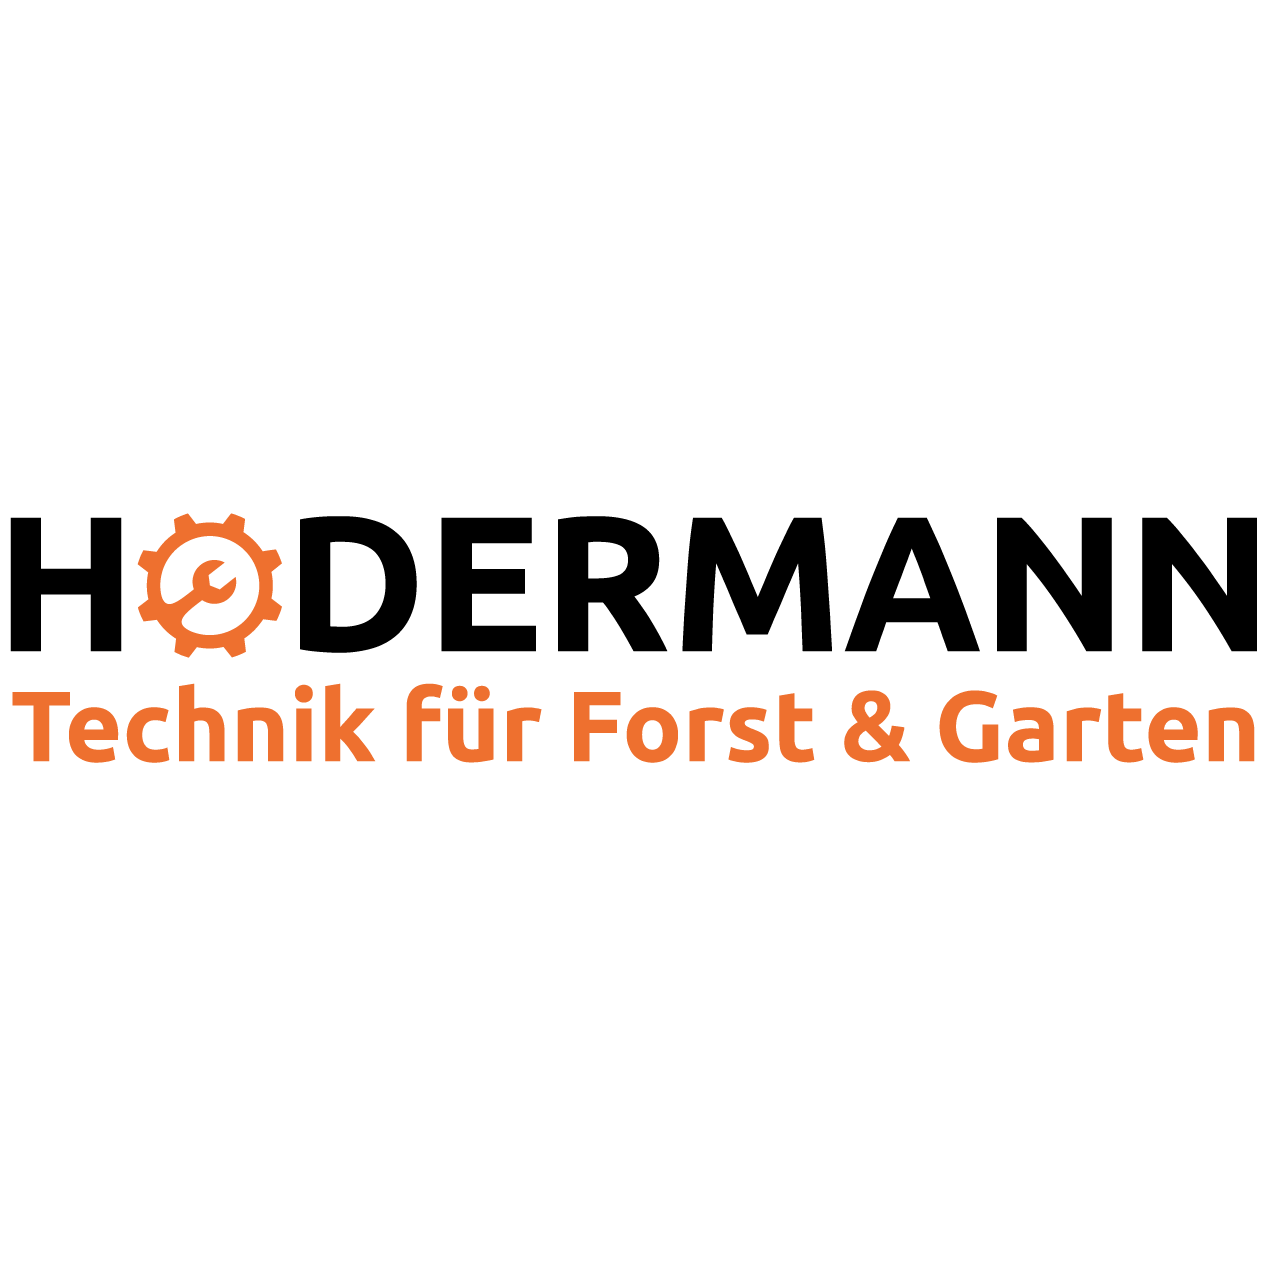 Hodermann - Lawn Mower Store - Ostheim - 09777 1577 Germany | ShowMeLocal.com